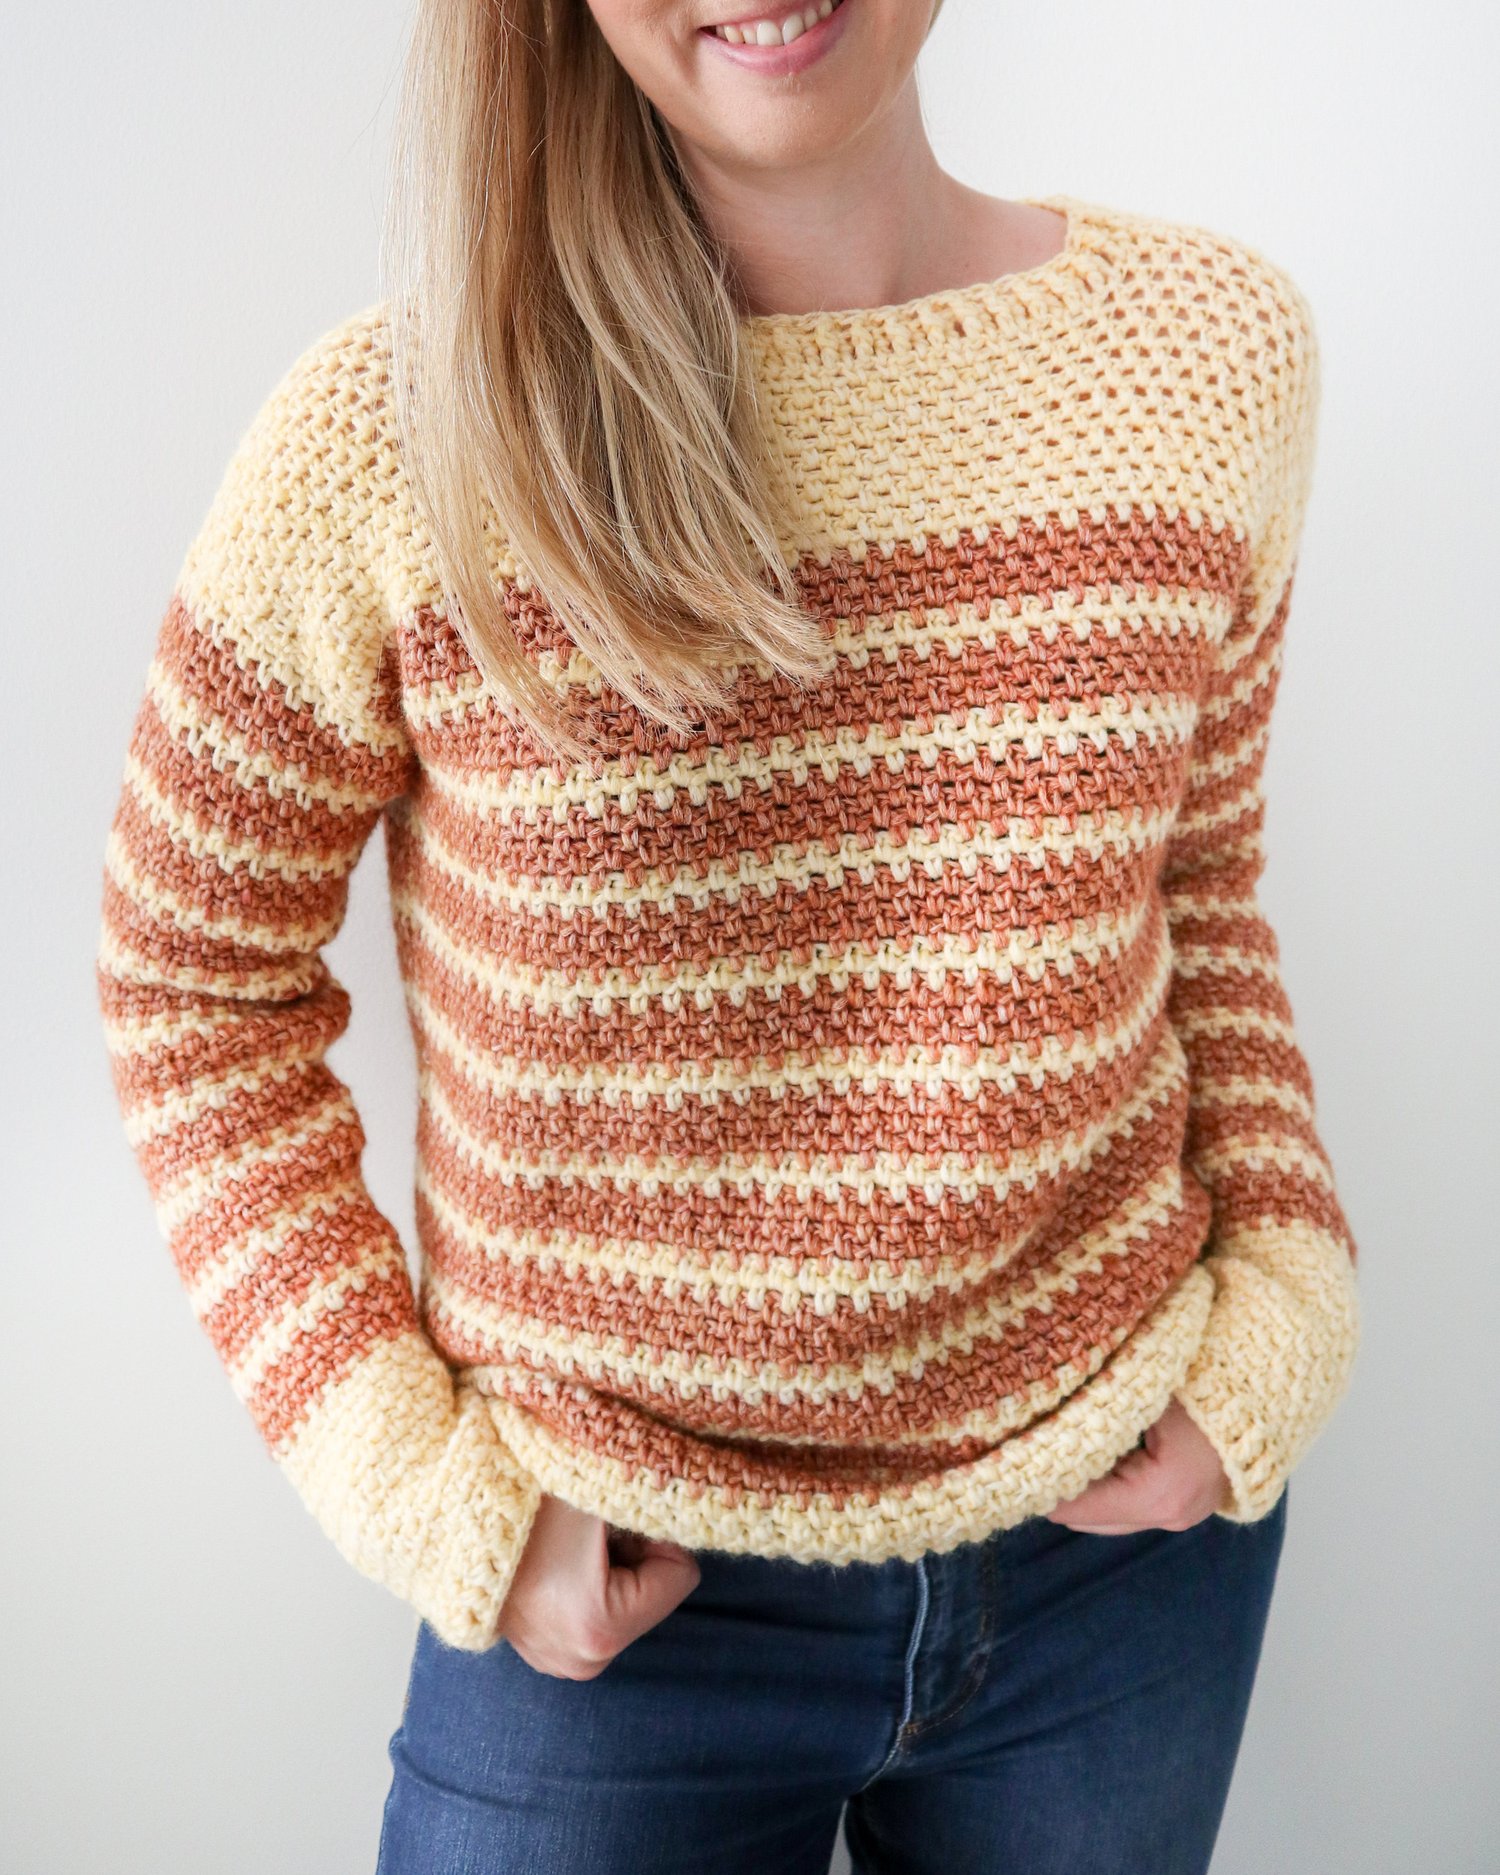 DESIRE: Crochet Tunic Pattern - Crochet Tutorial in English